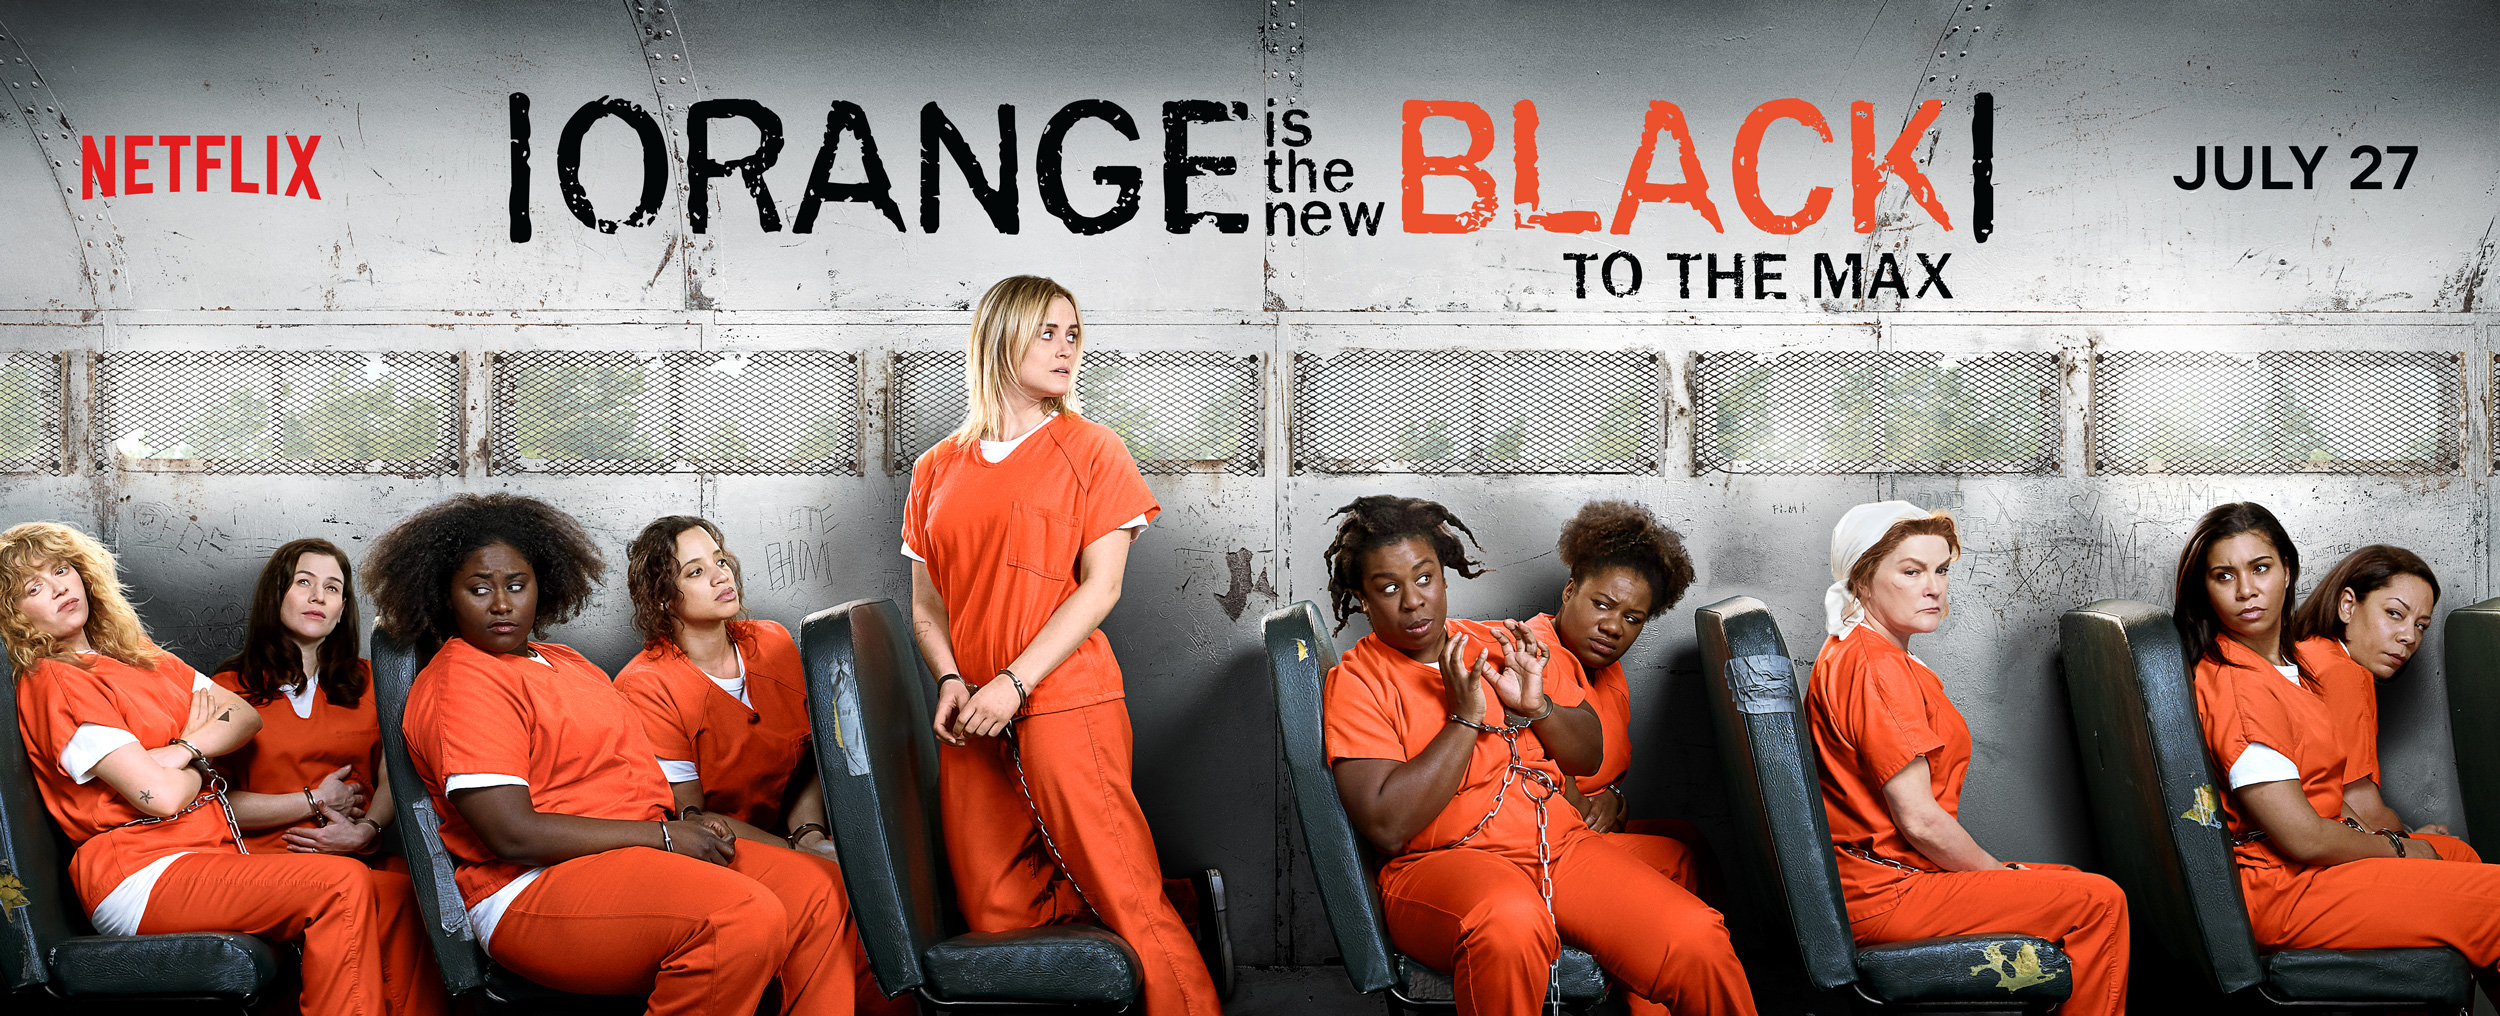 Orange Is the New Black [credit: Netflix]